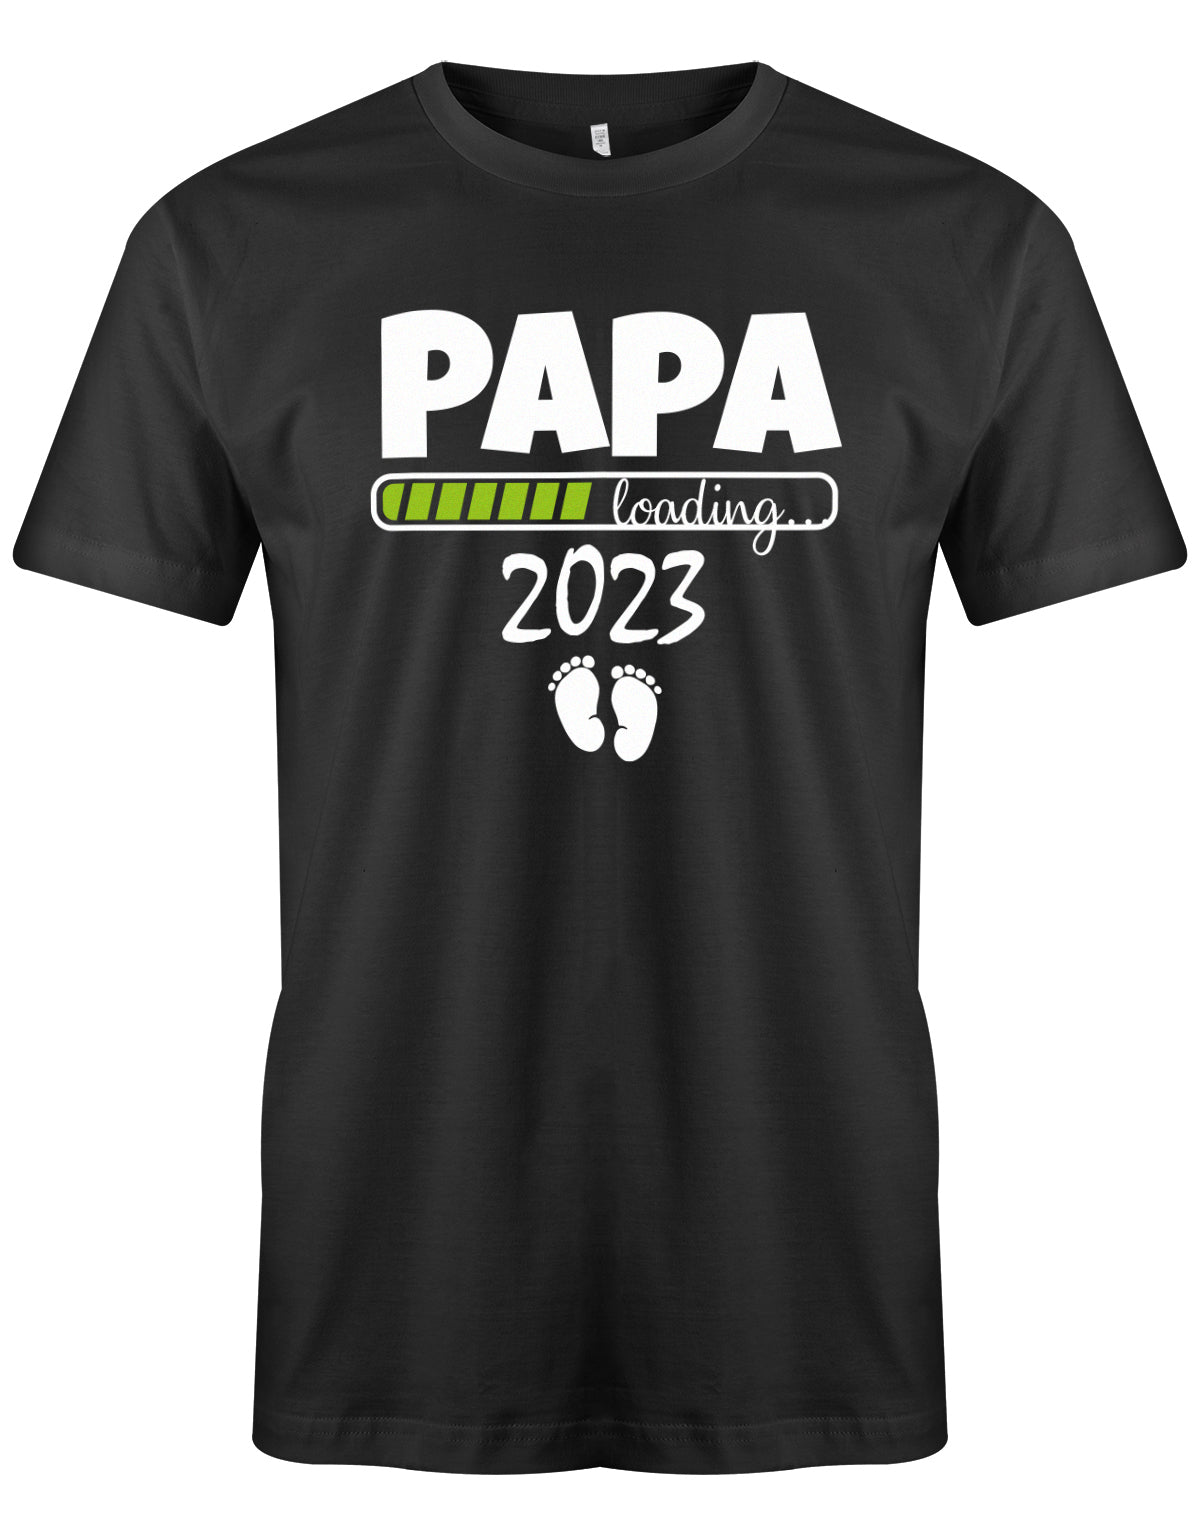 Papa loading 2023 - Geburt - Werdender Papa Shirt Herren Schwarz